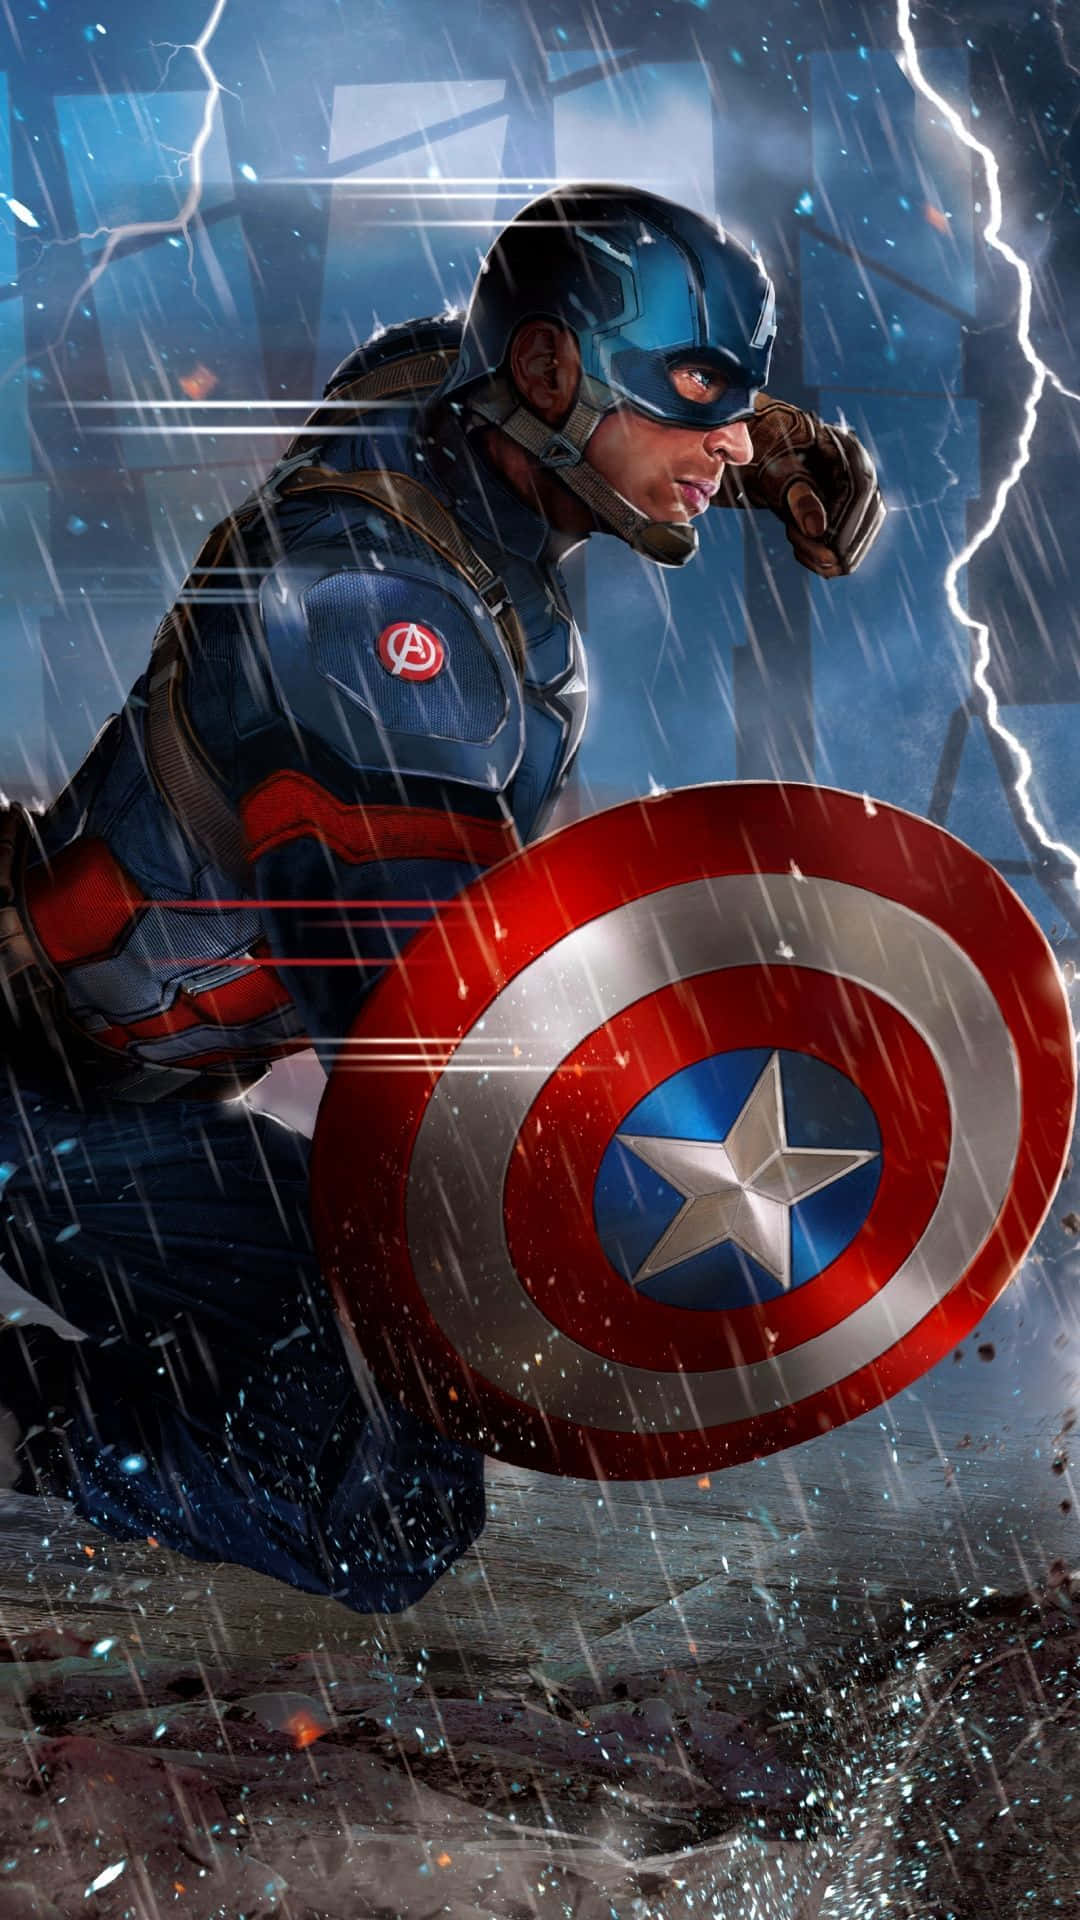 !Captain America er klar til at frelse dagen!